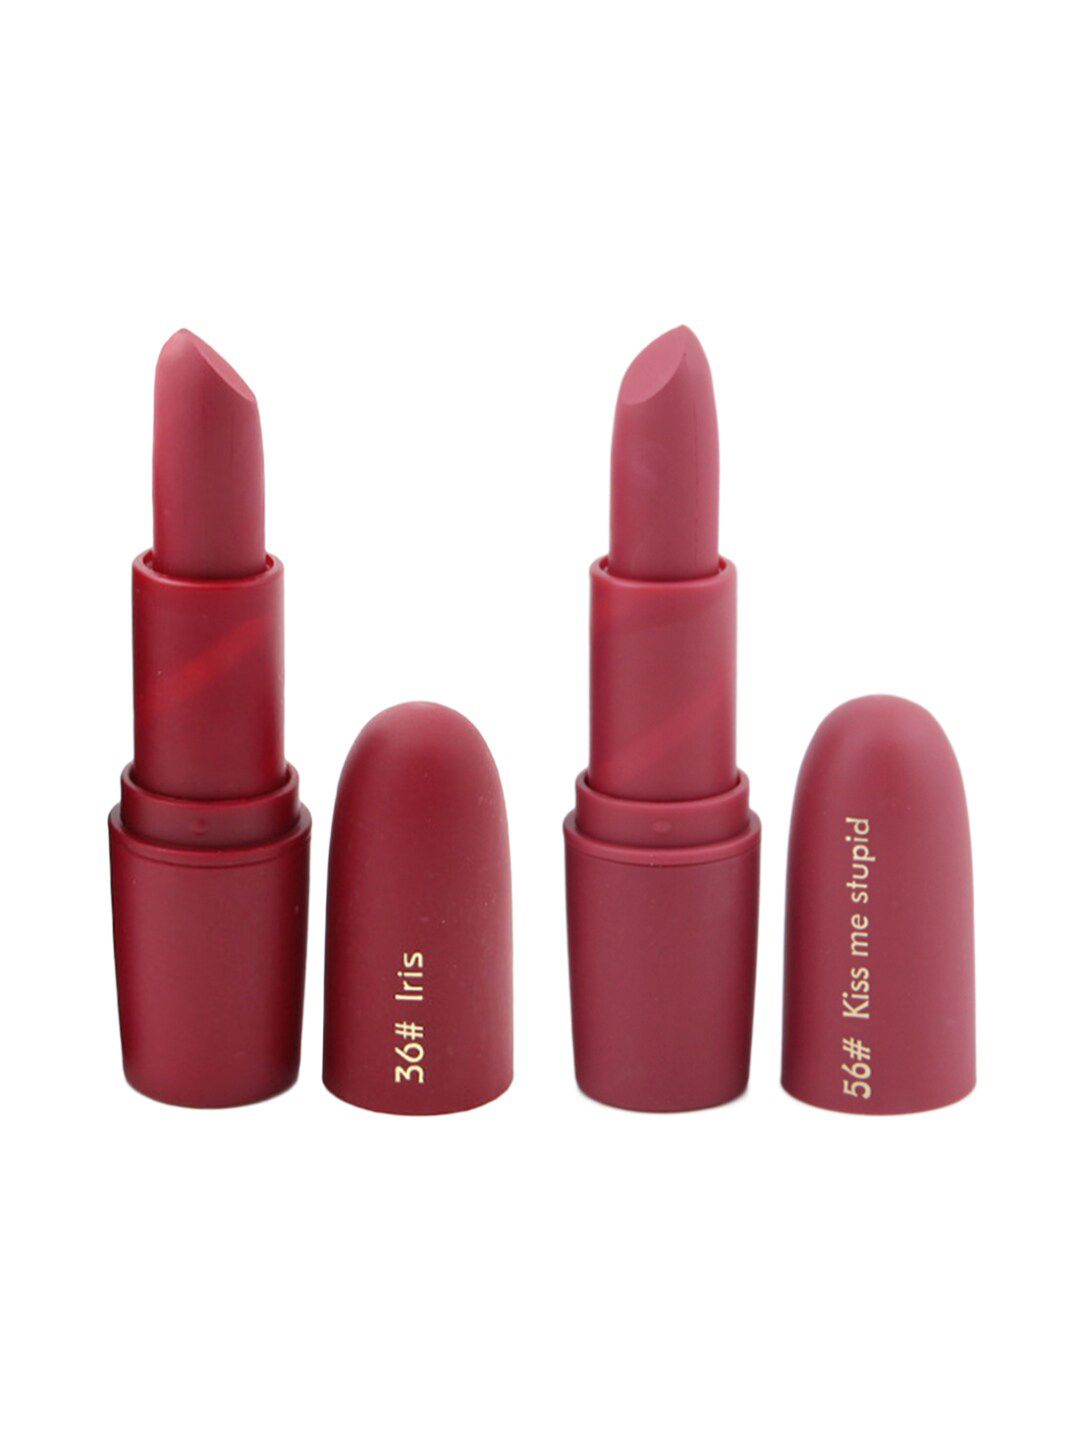 MISS ROSE Professional Make-Up Set of 2 Matte Lipsticks - Iris 36 & Kiss Me Stupid 56 Price in India